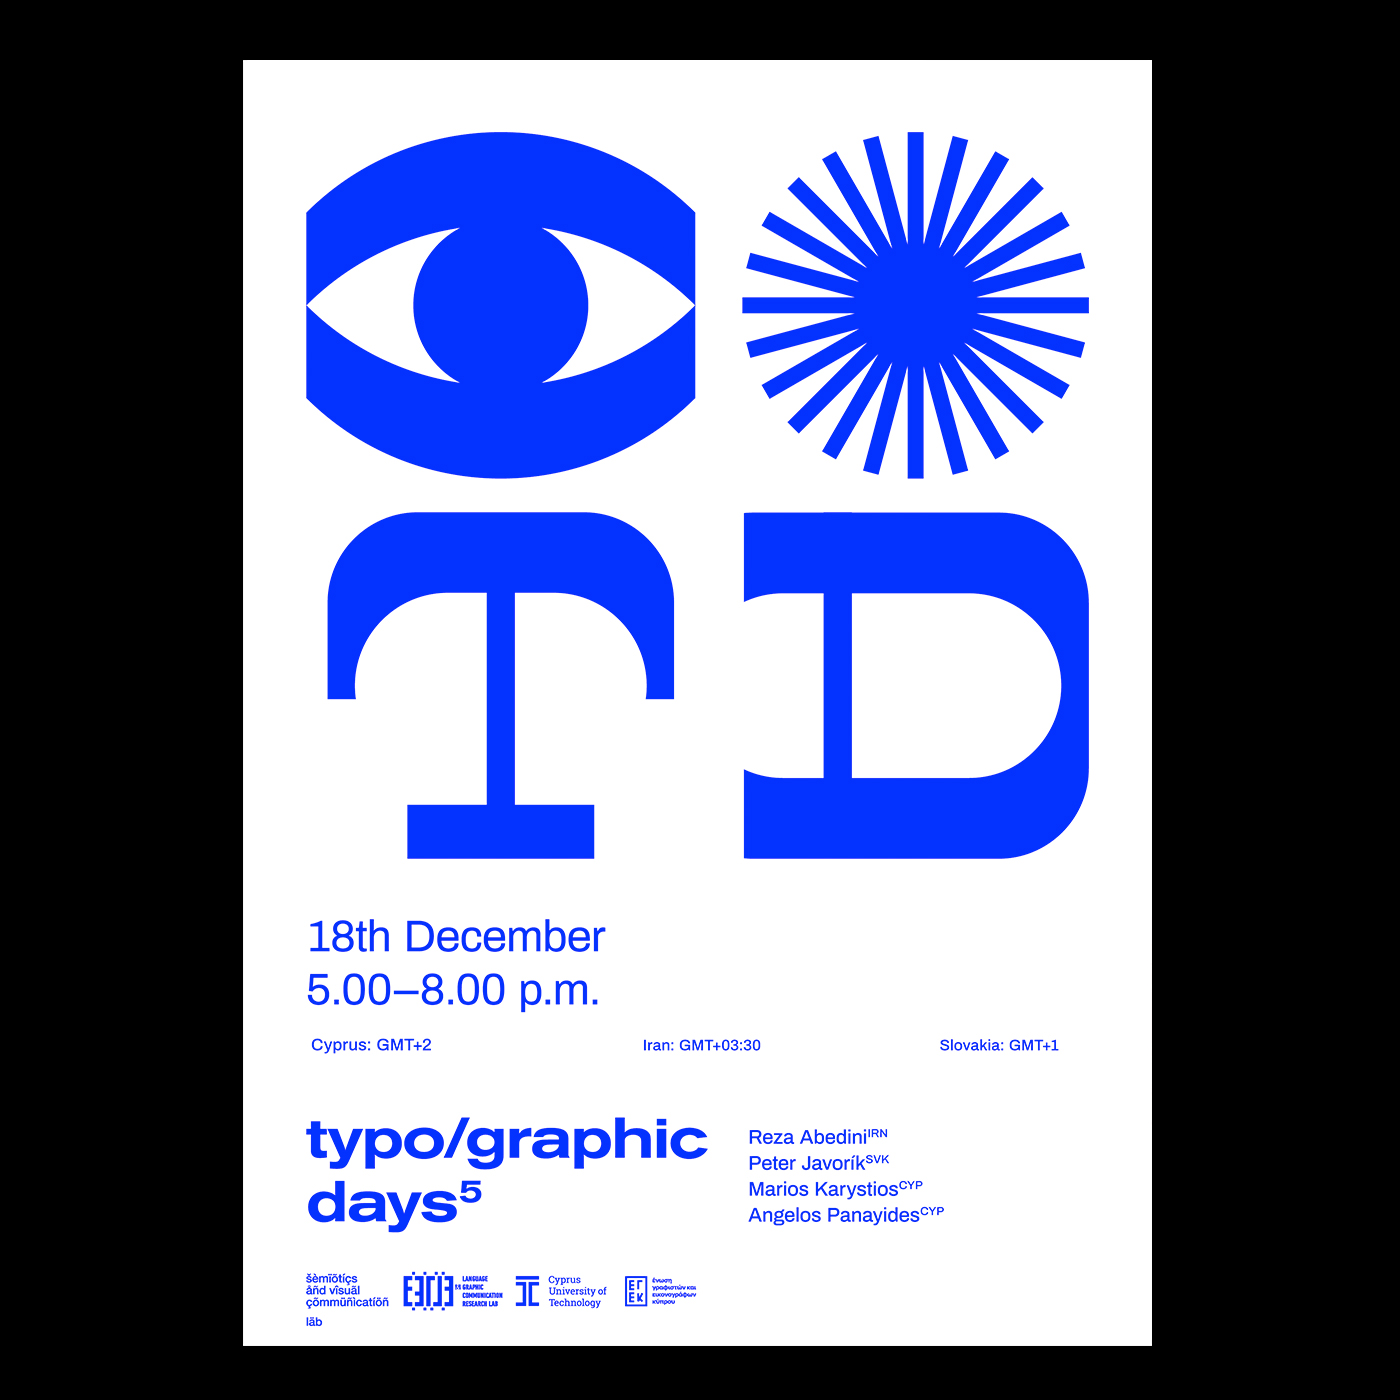 typographic days event poster